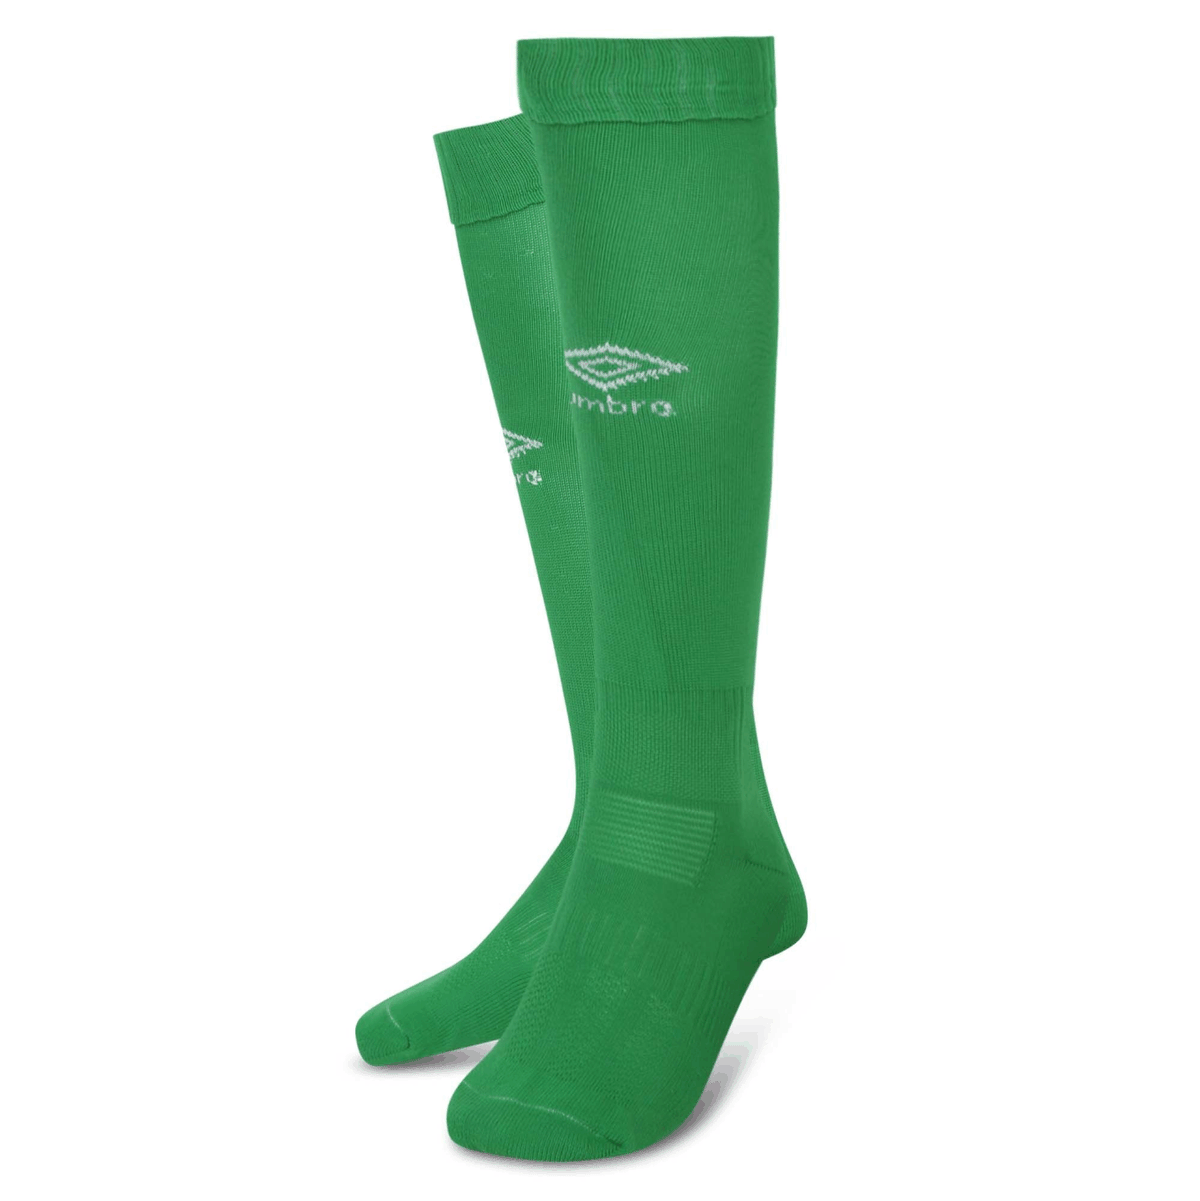 Lutterworth Athletic - Classico Socks